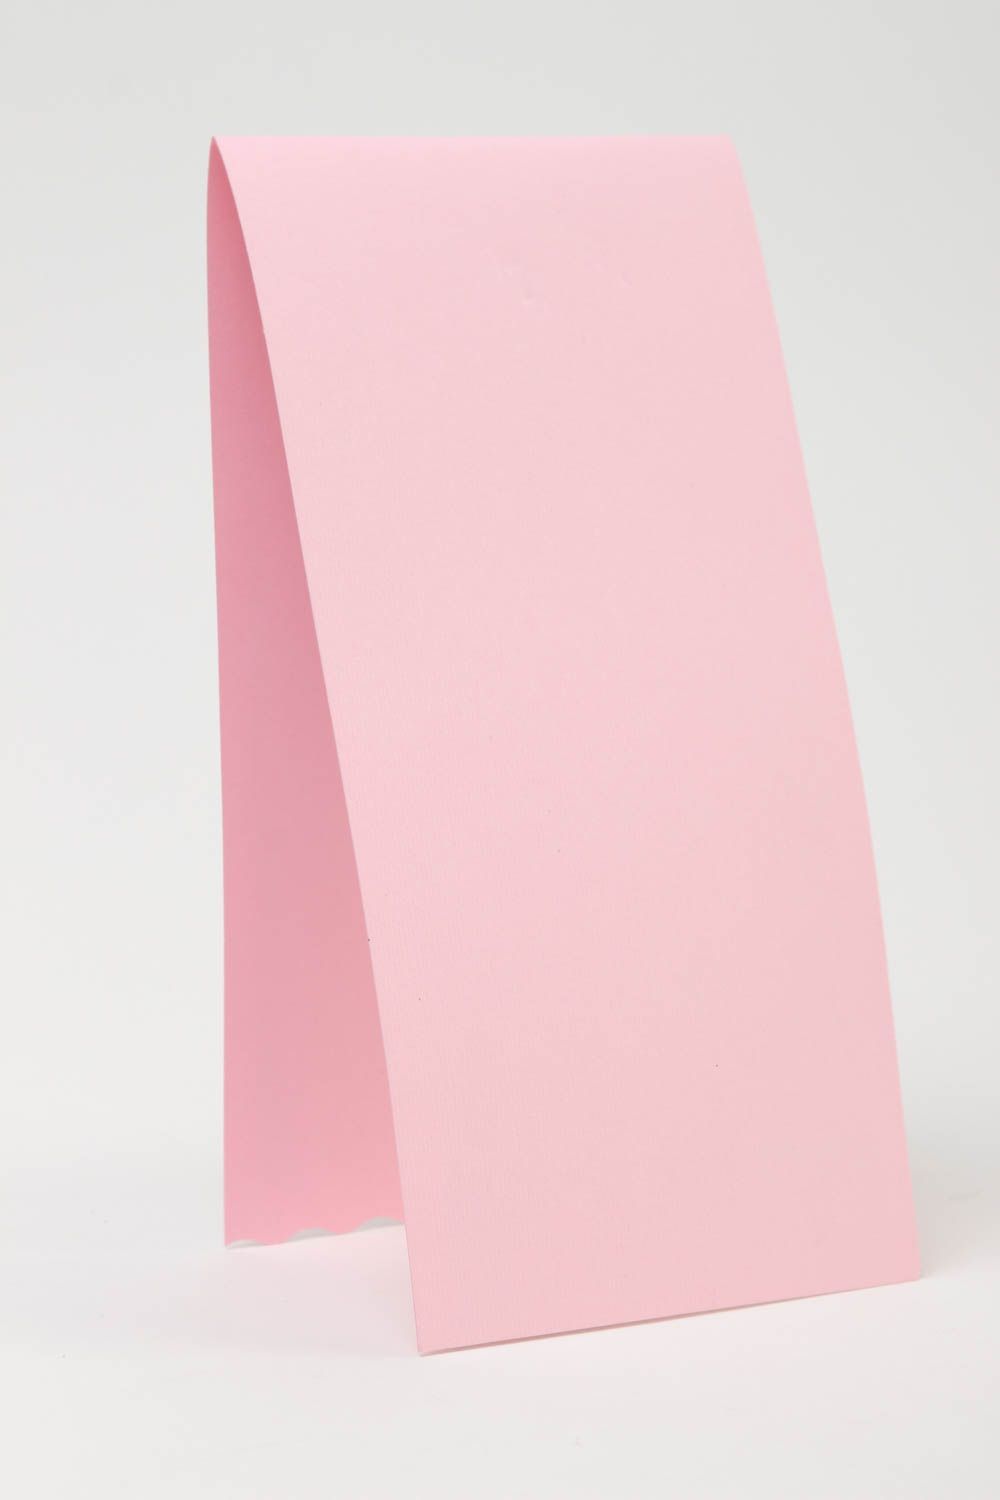 Handmade Grußkarten Papier Scrapbook Karten schöne Grußkarten rosa fraulich nett foto 4